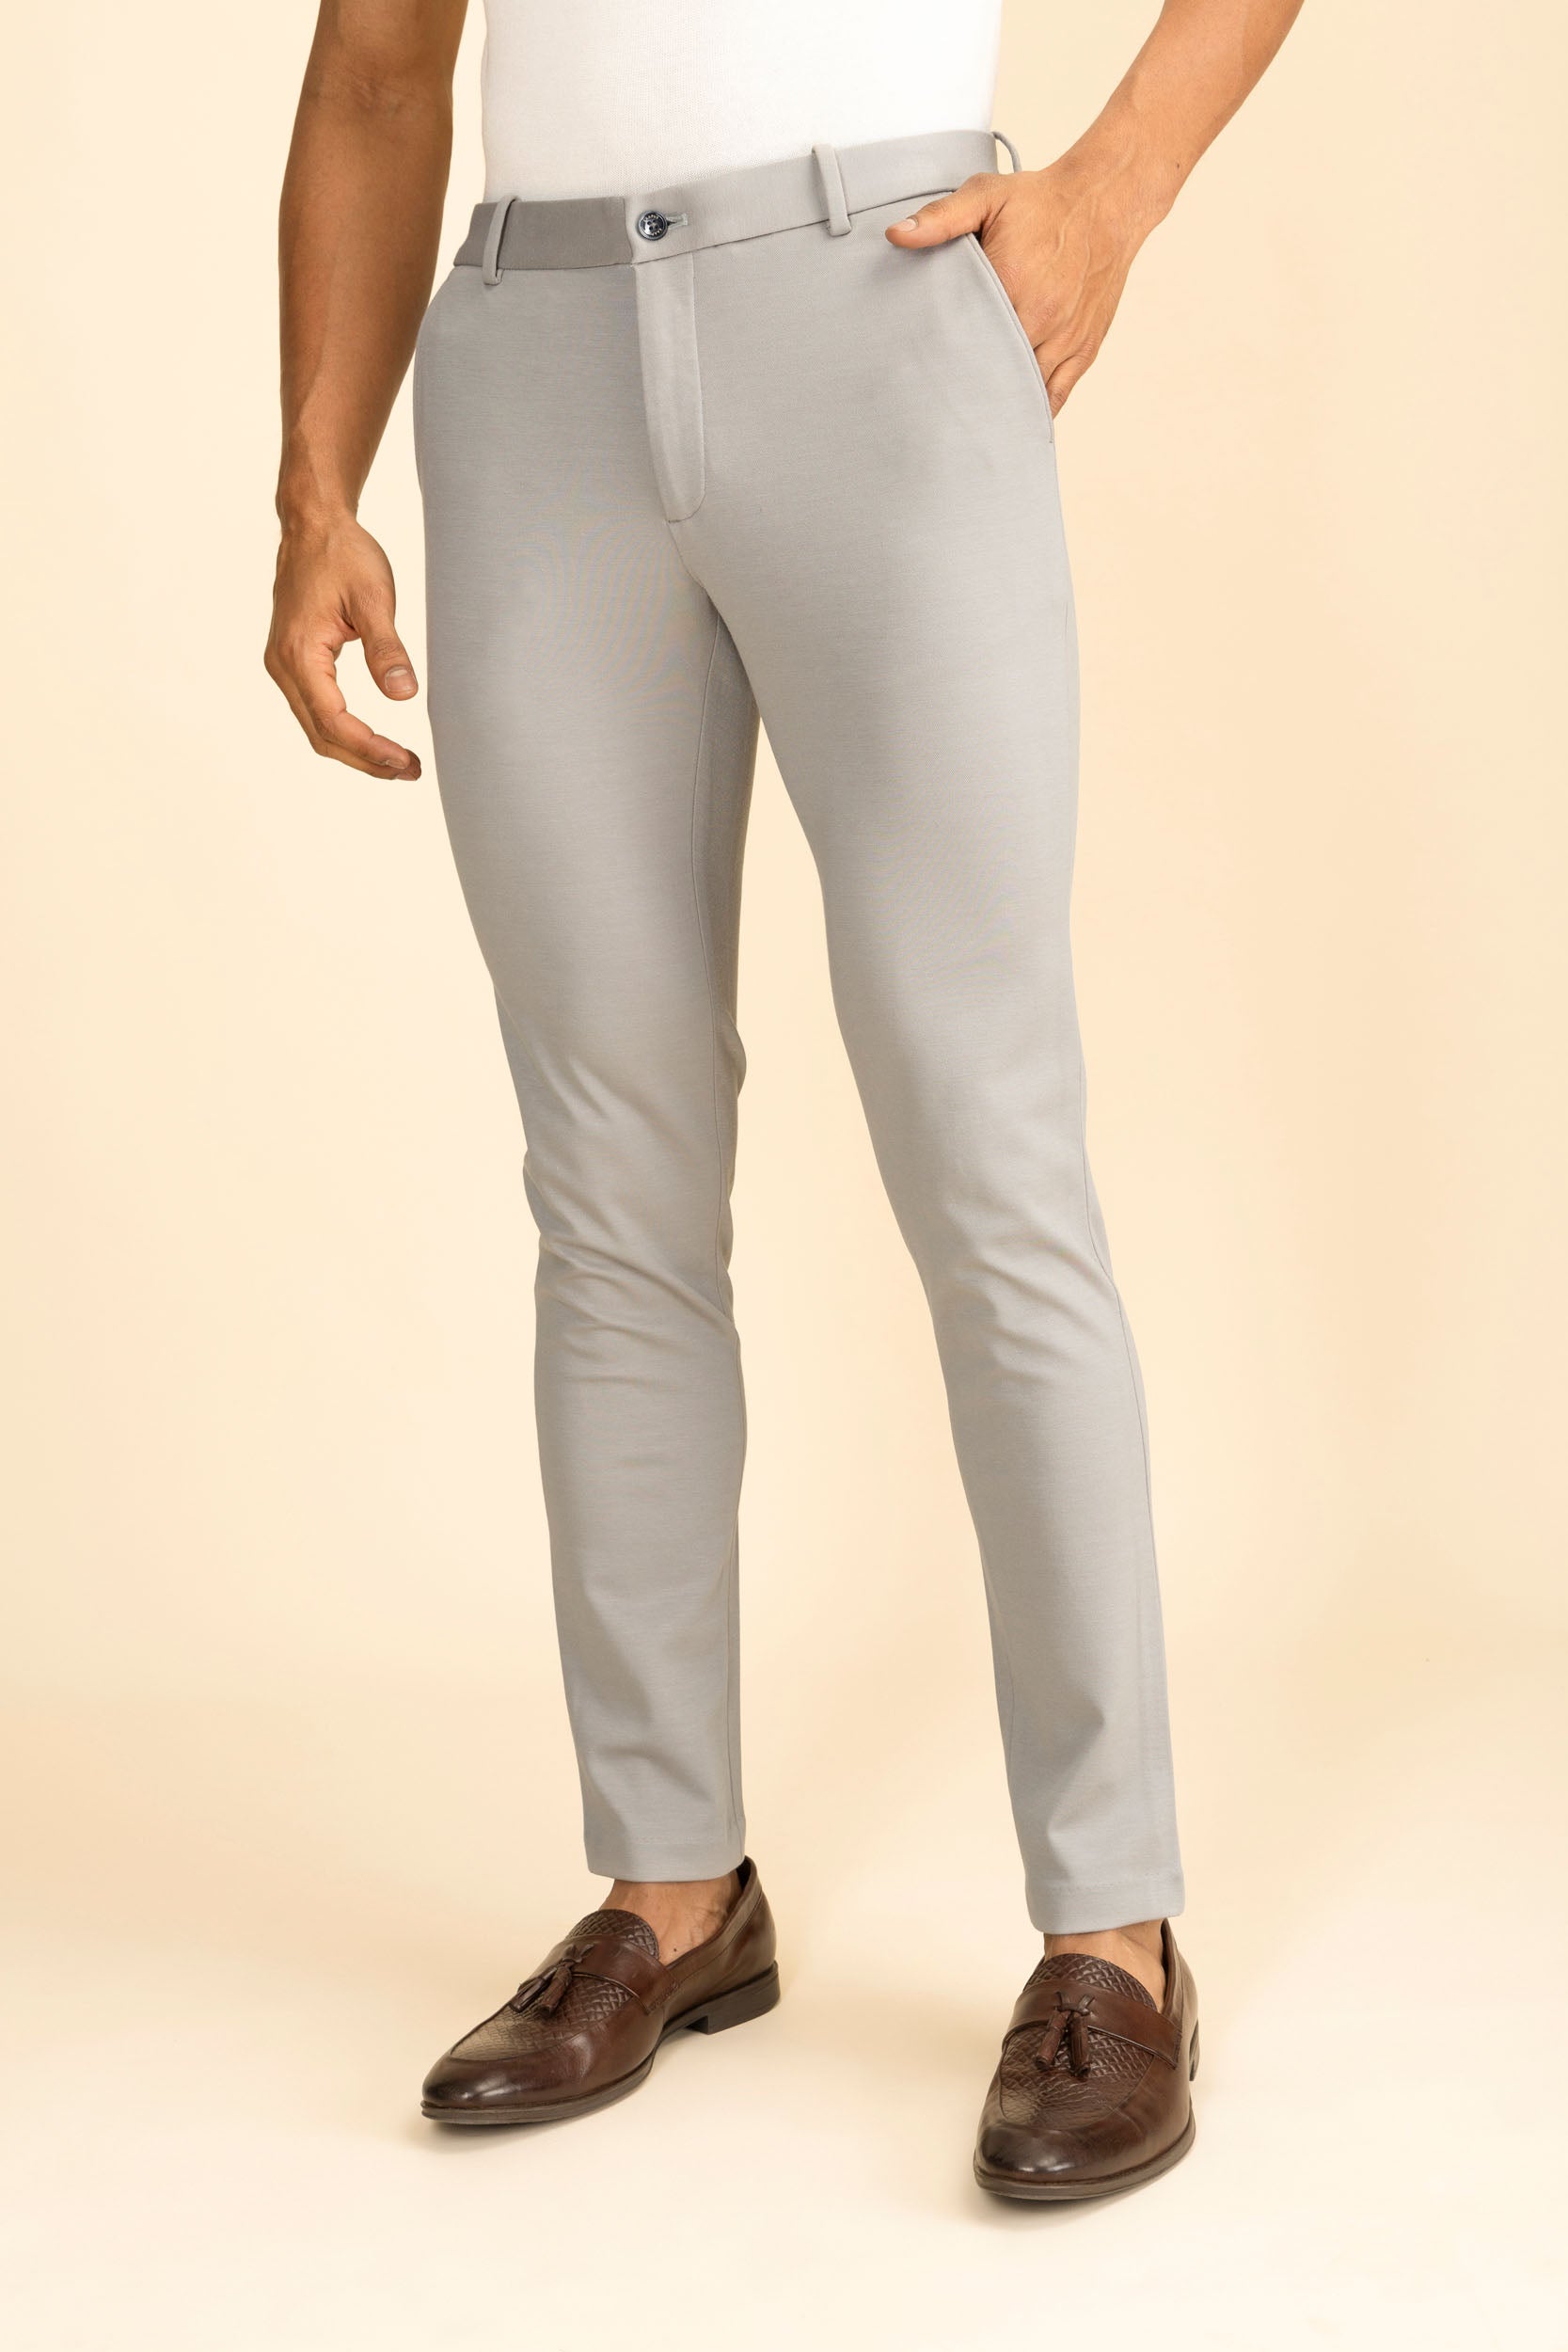 Grey 4 Way Stretch Port Pants